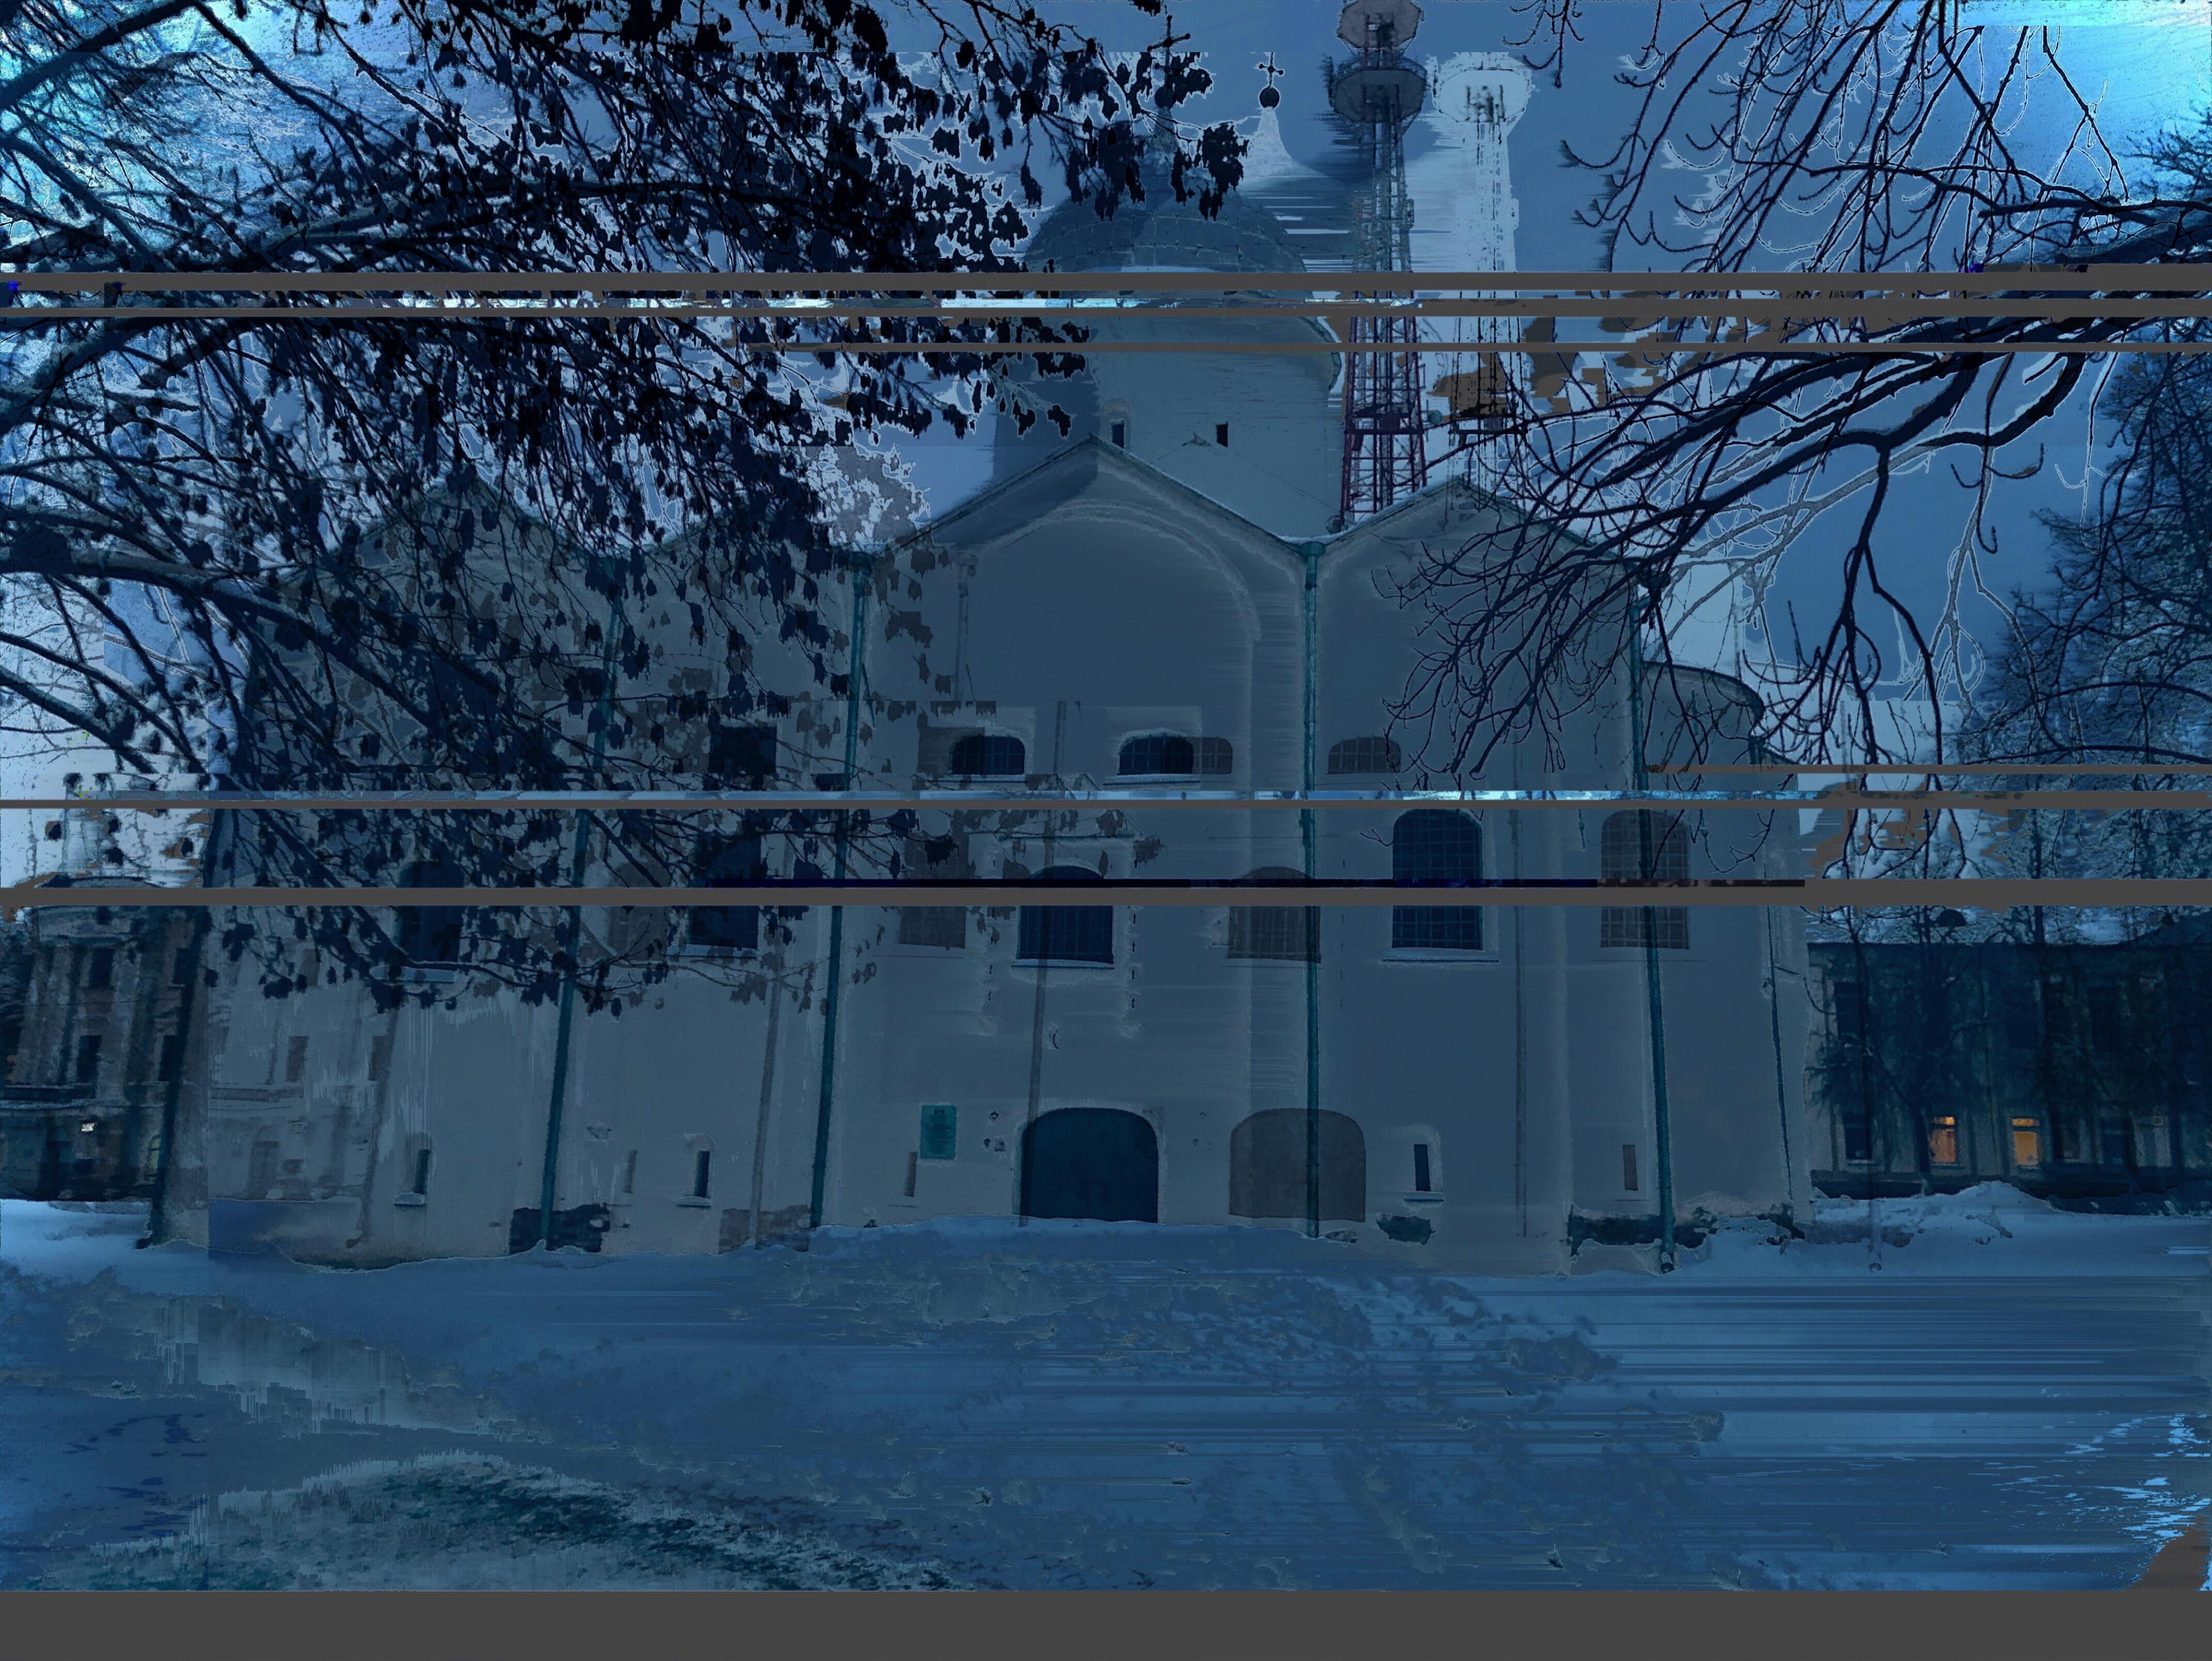 "Церковь Святого Иоанна на Опоках в глитче" / "Church of St. John the Baptist on Opoki in glitch" (2022)